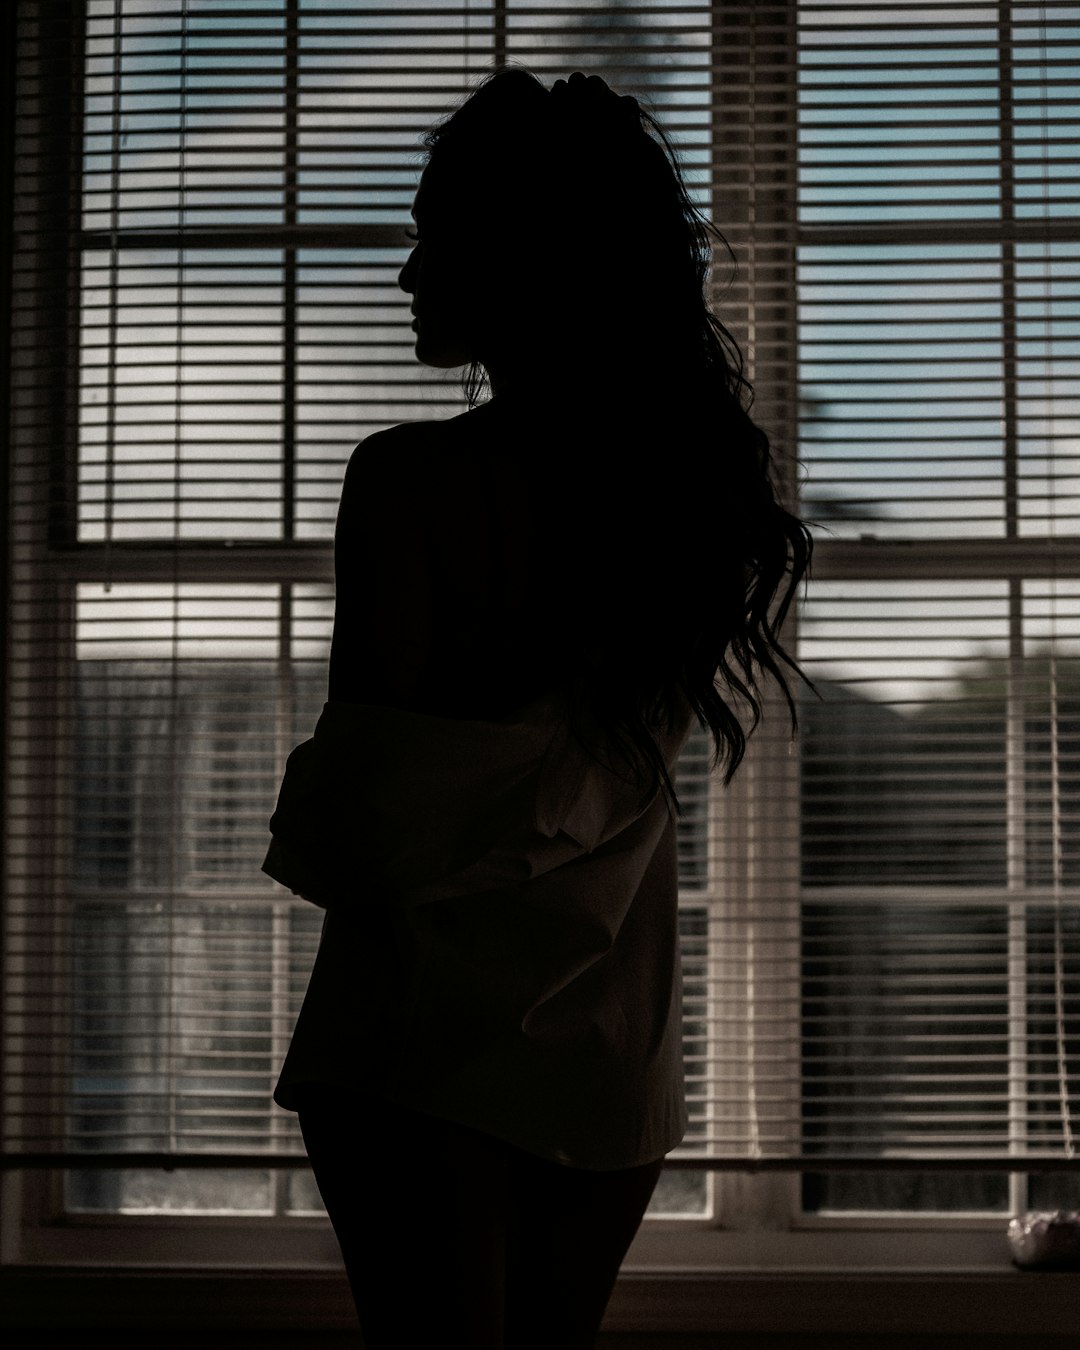 woman in white dress standing near window blinds